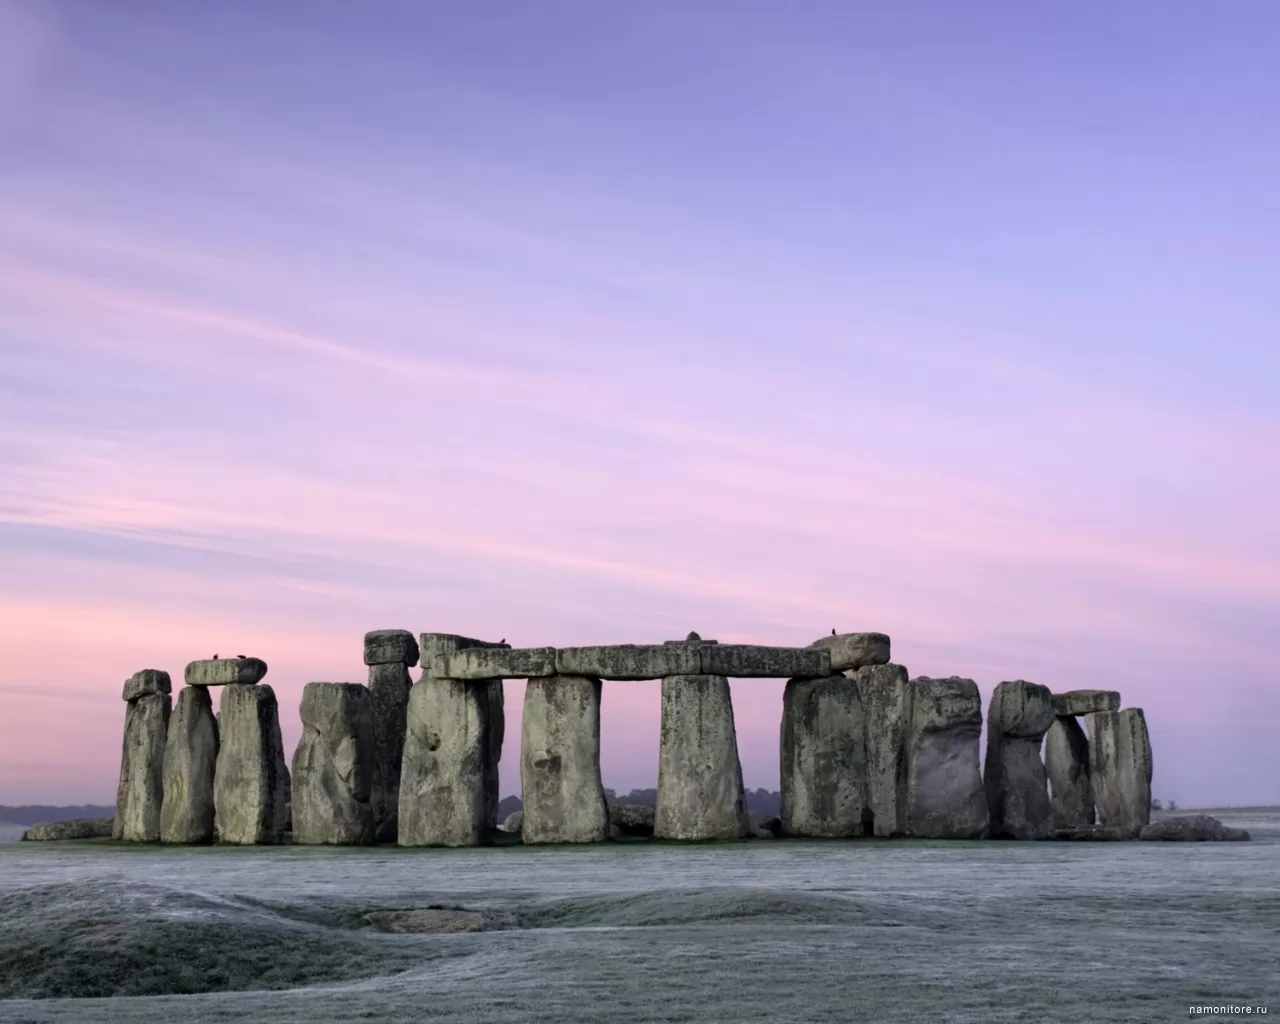 Great Britain, a Stonehendge at a dawn, England, Europe, lilac, nature x